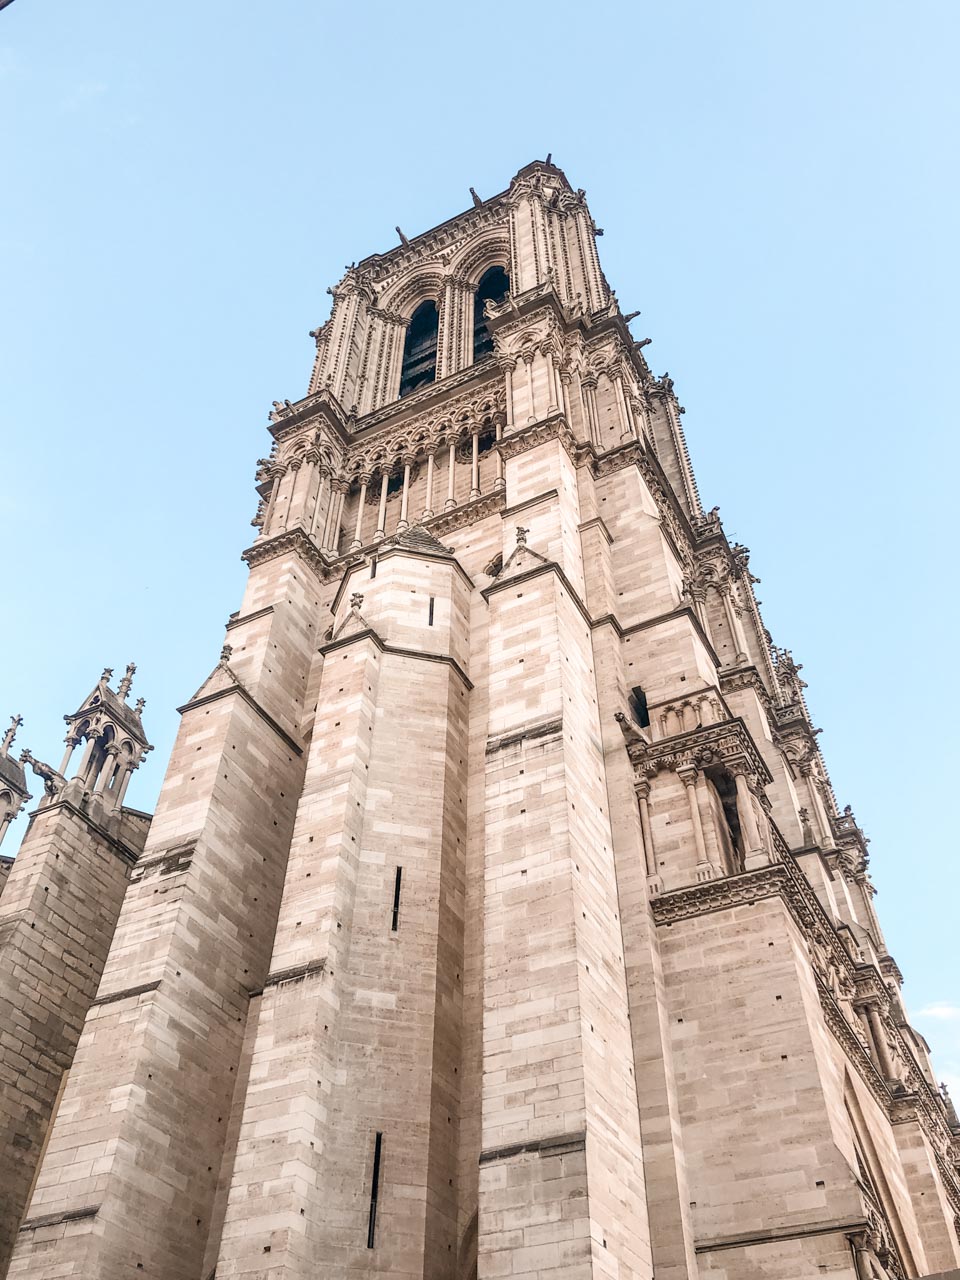 An upwards shot of Notre-Dame de Paris